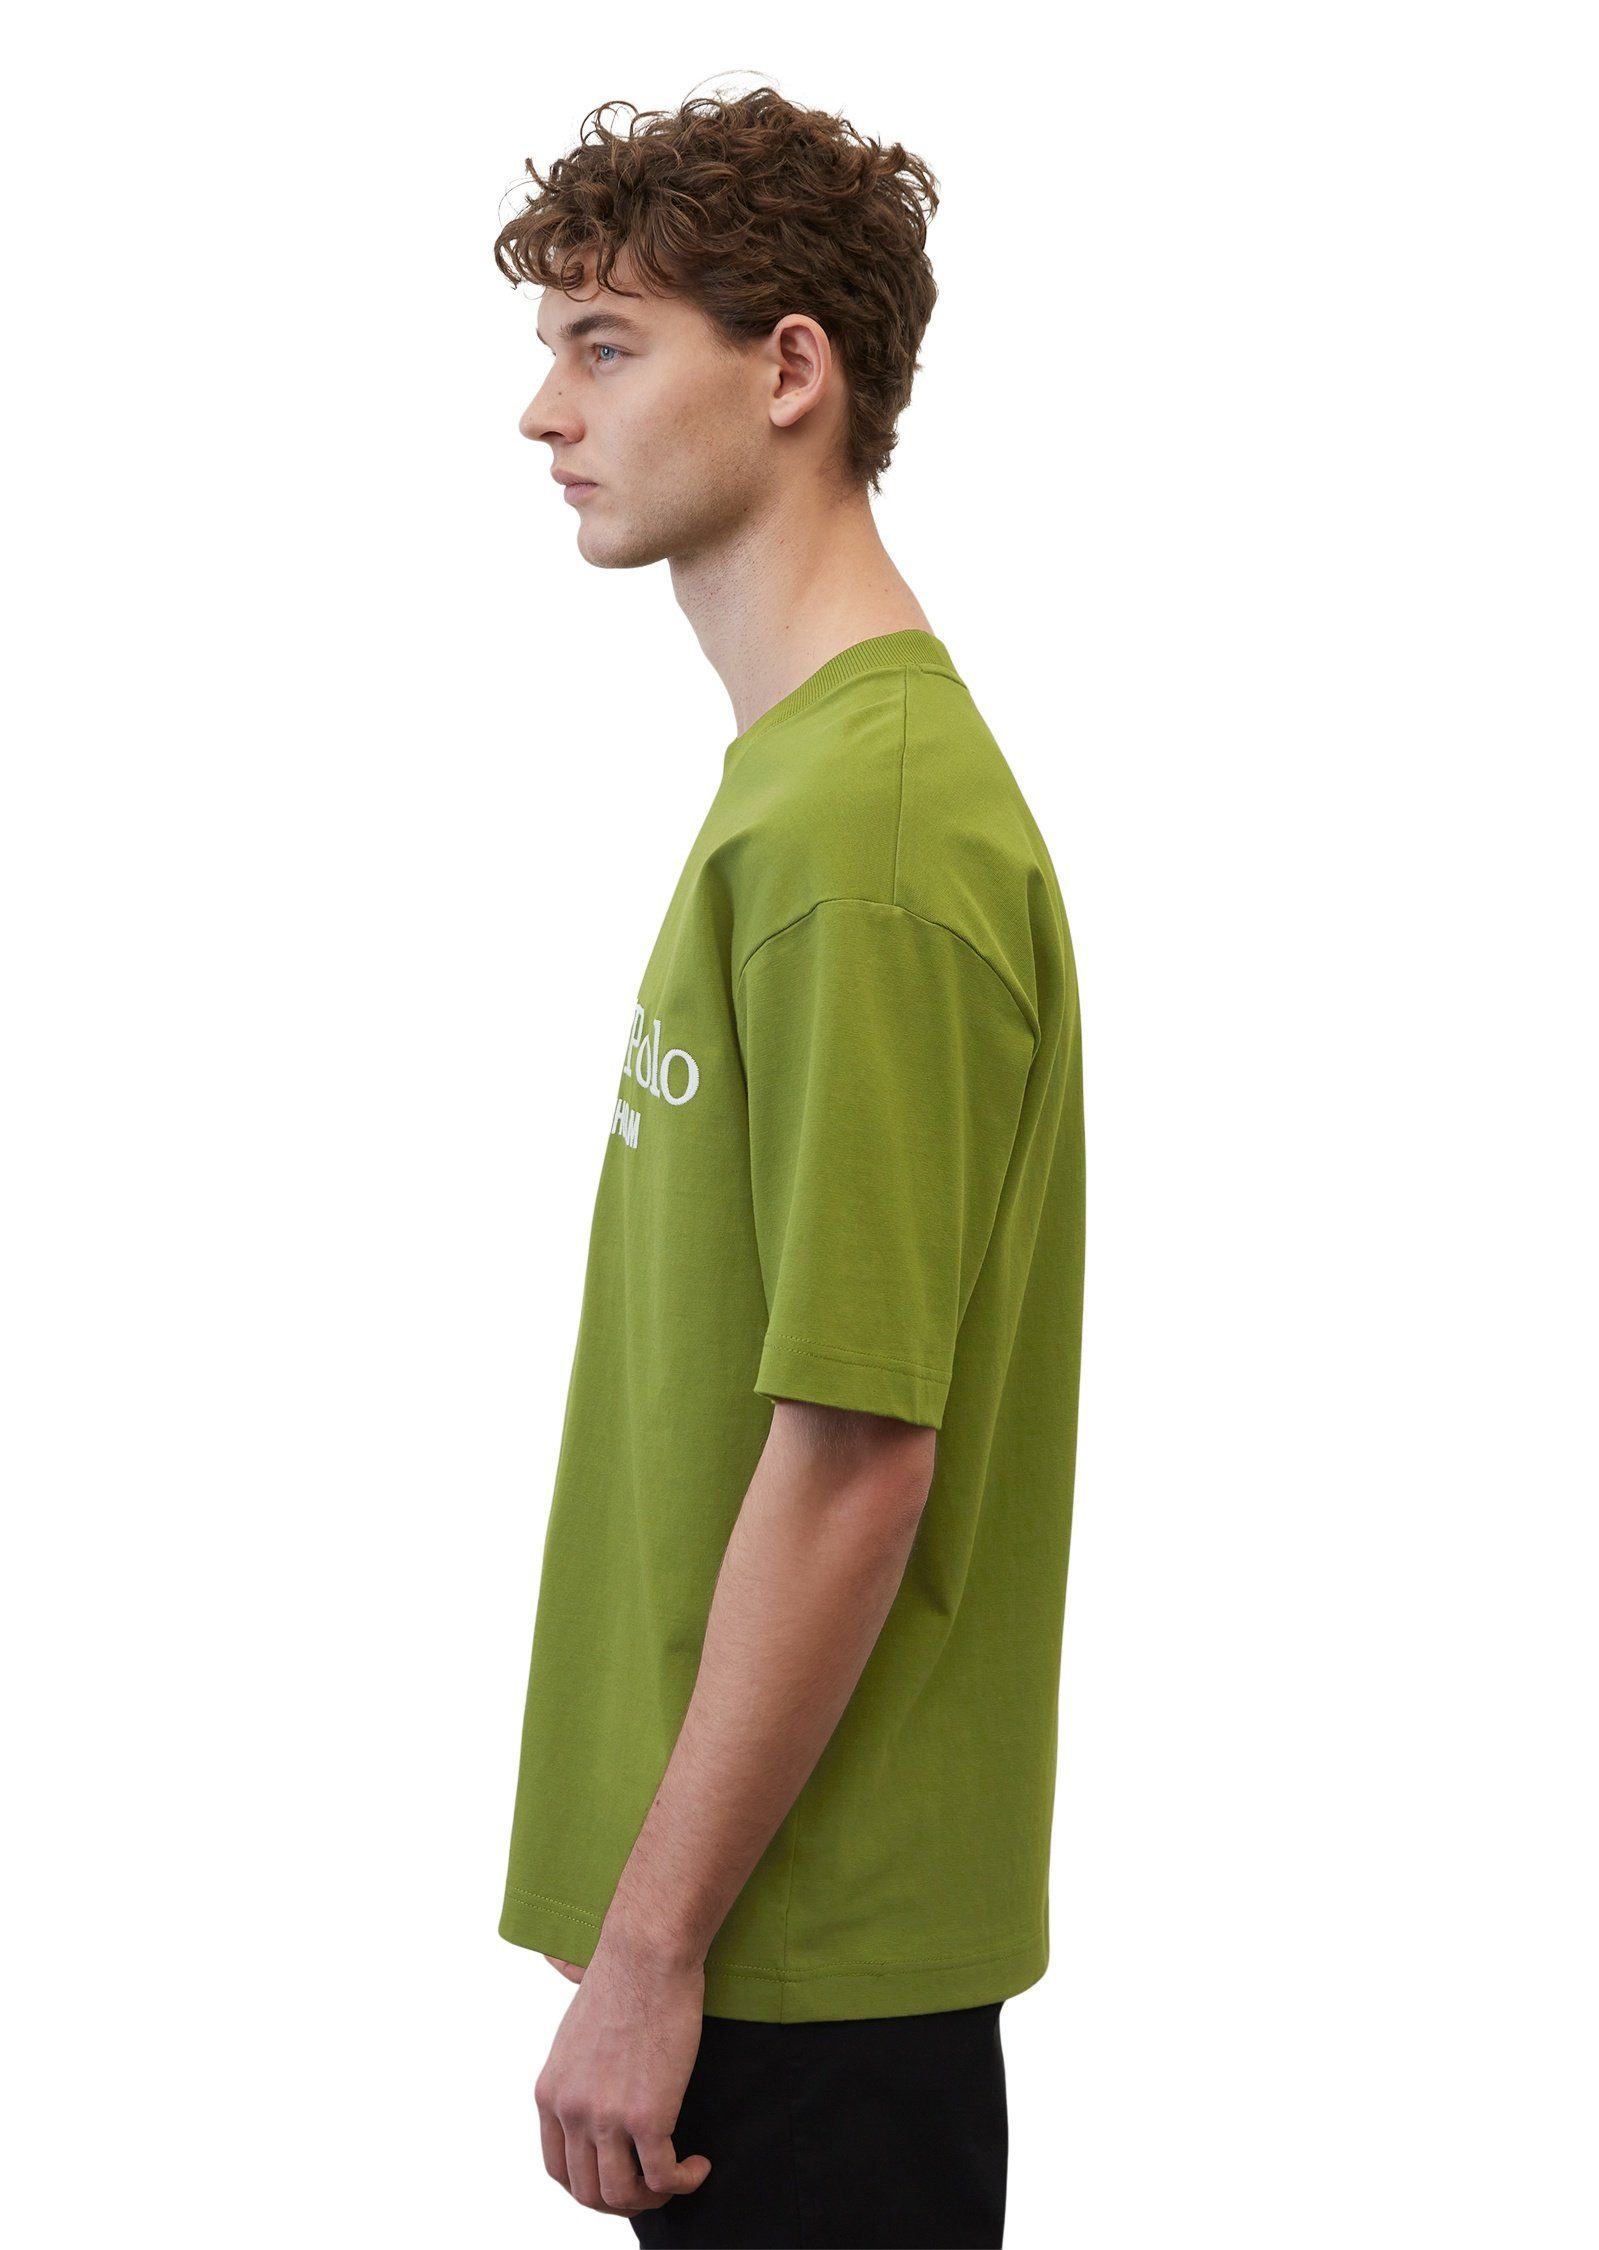 Marc O'Polo hochwertiger T-Shirt dunkelgrün Bio-Baumwolle aus